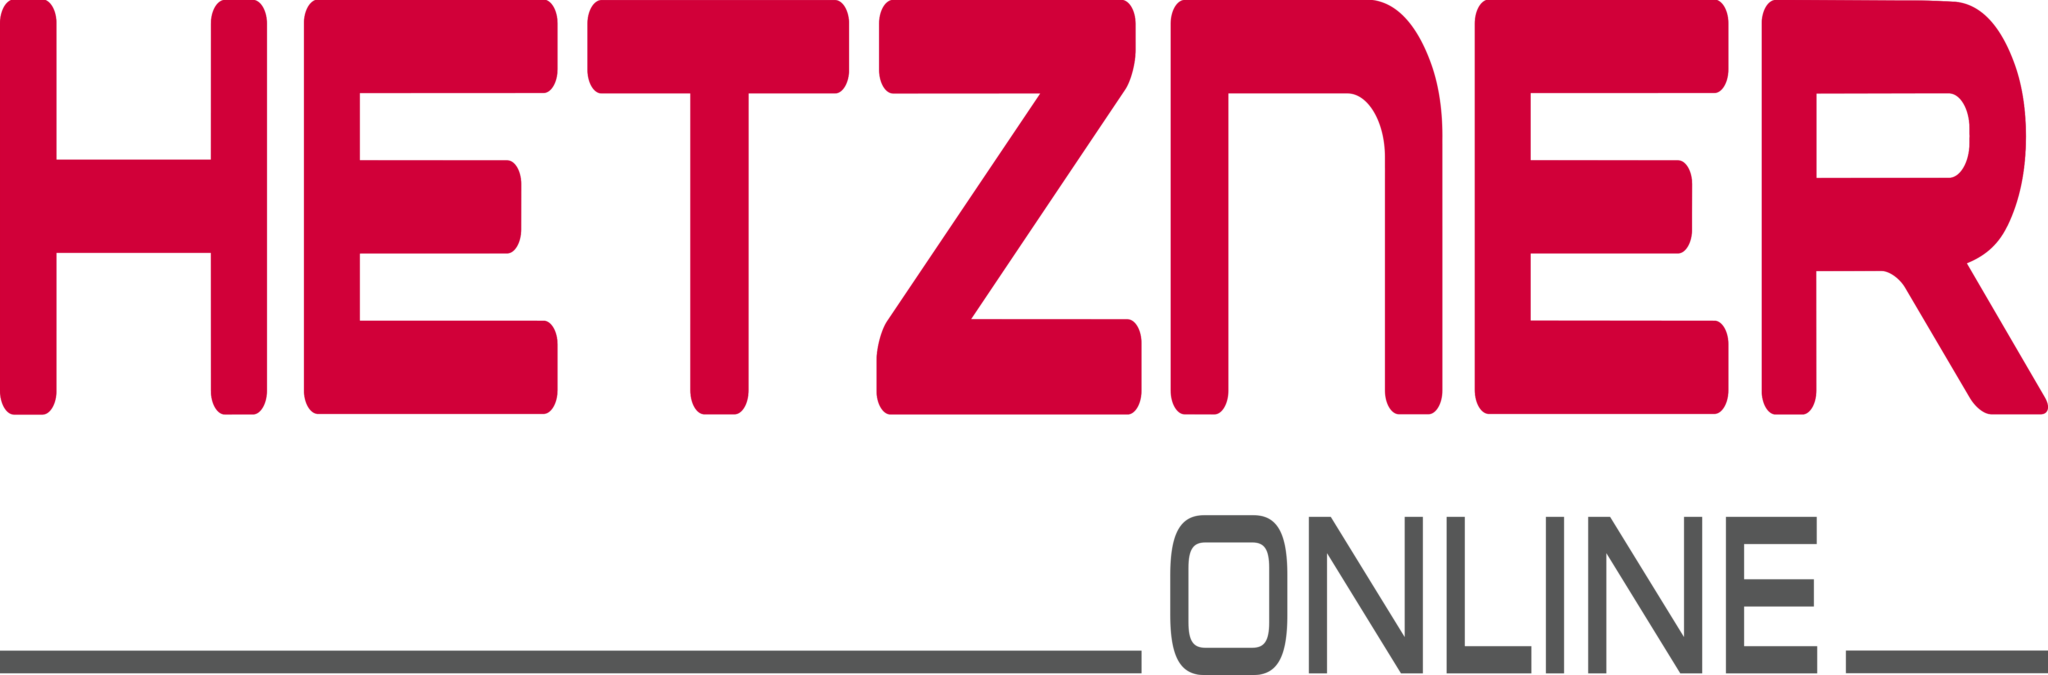 hetzner.com_logo-2048x675